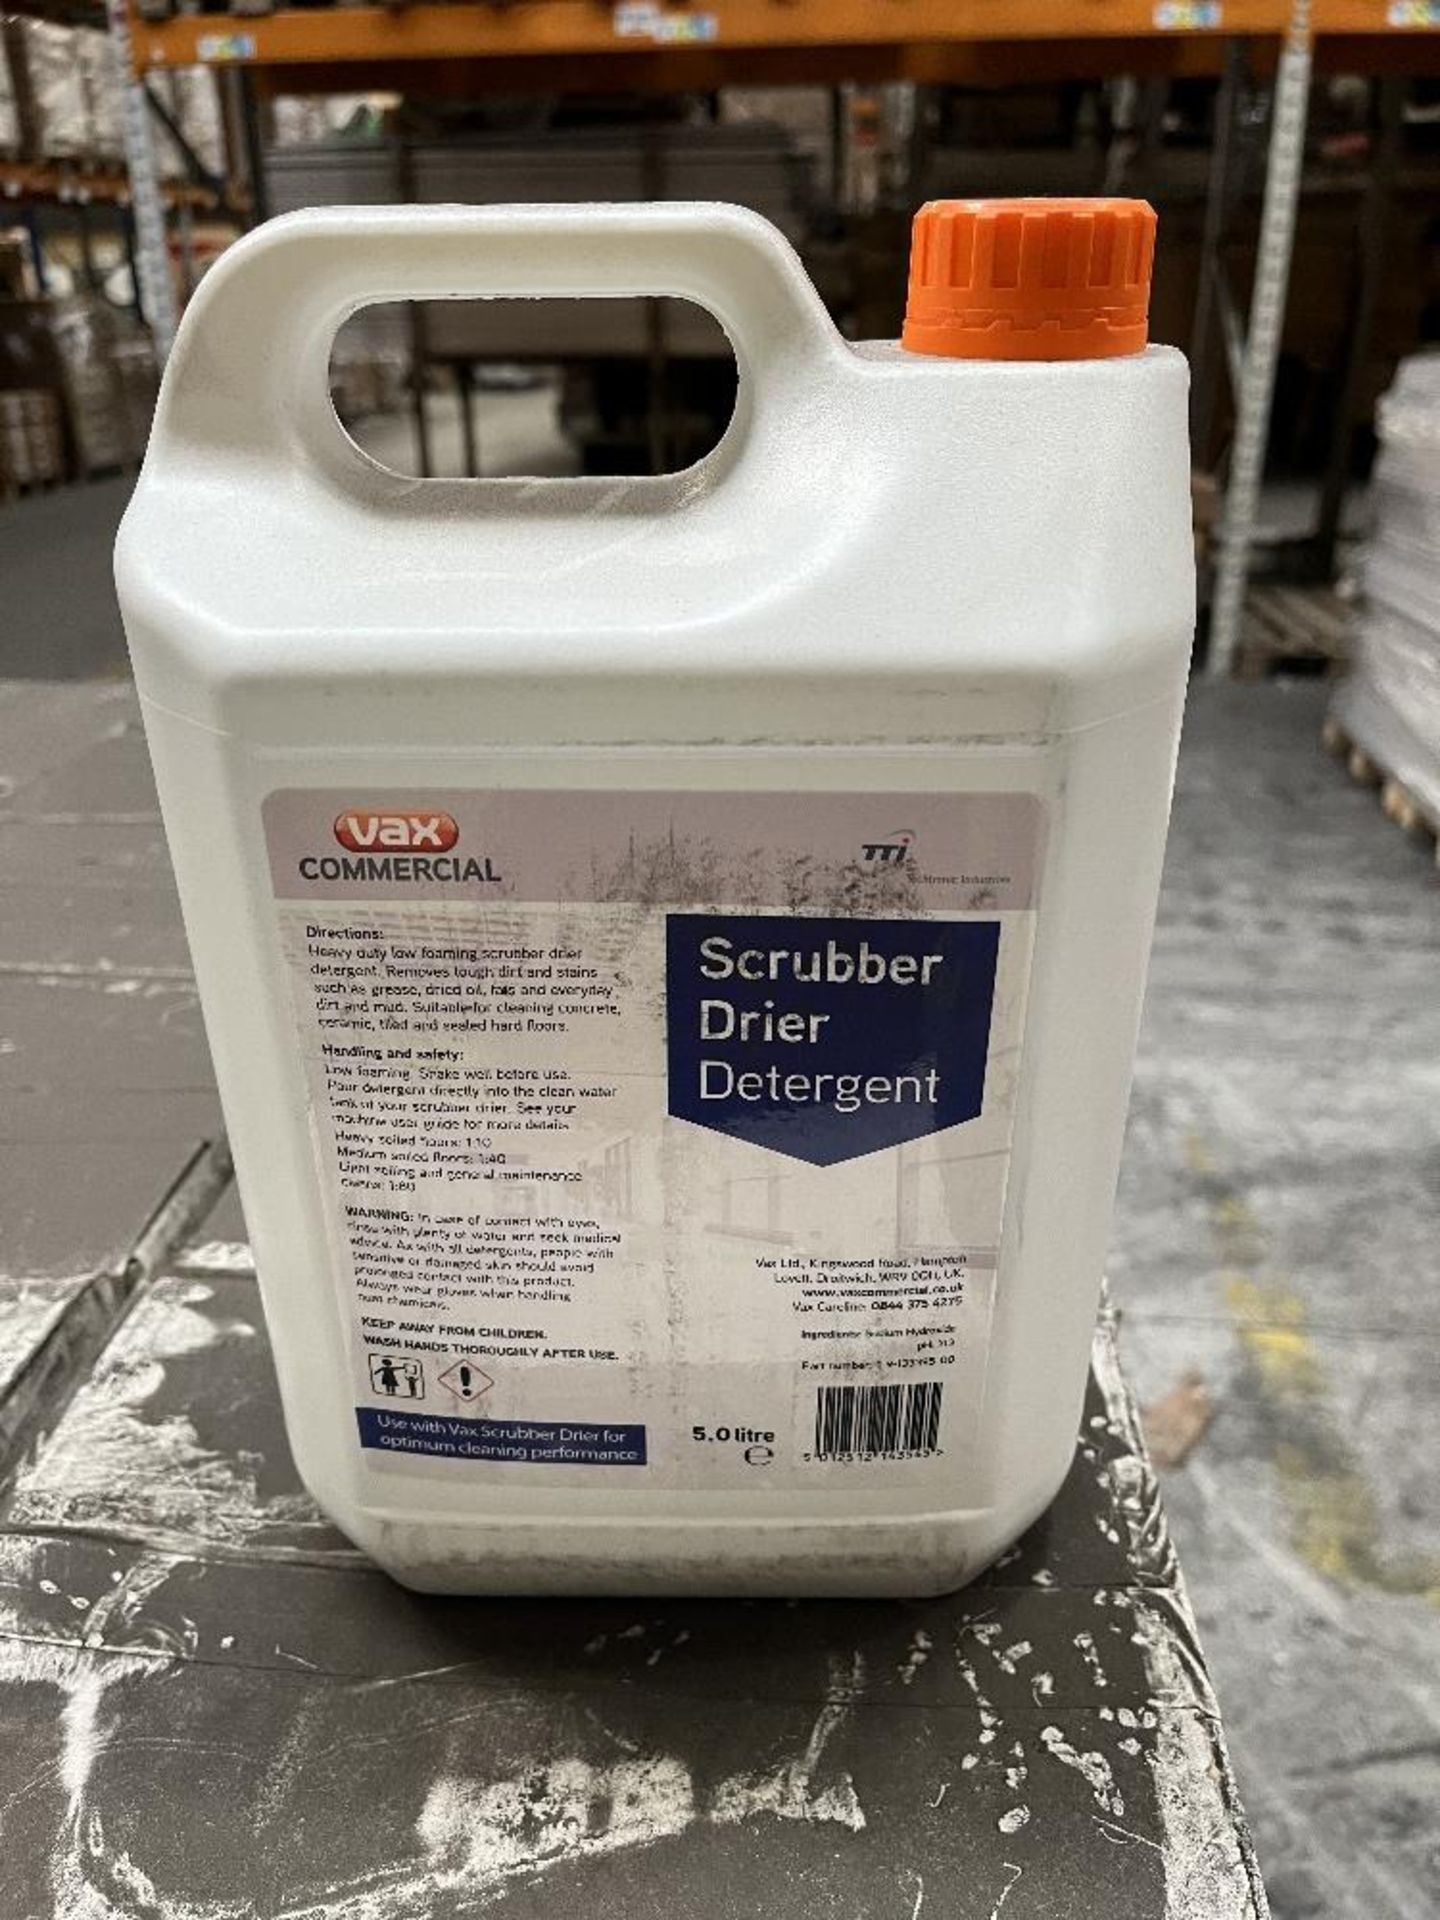 50 x Boxes Vax Scrubber Drier Detergent (2 x 5l Bottles Per Box) - Image 6 of 7